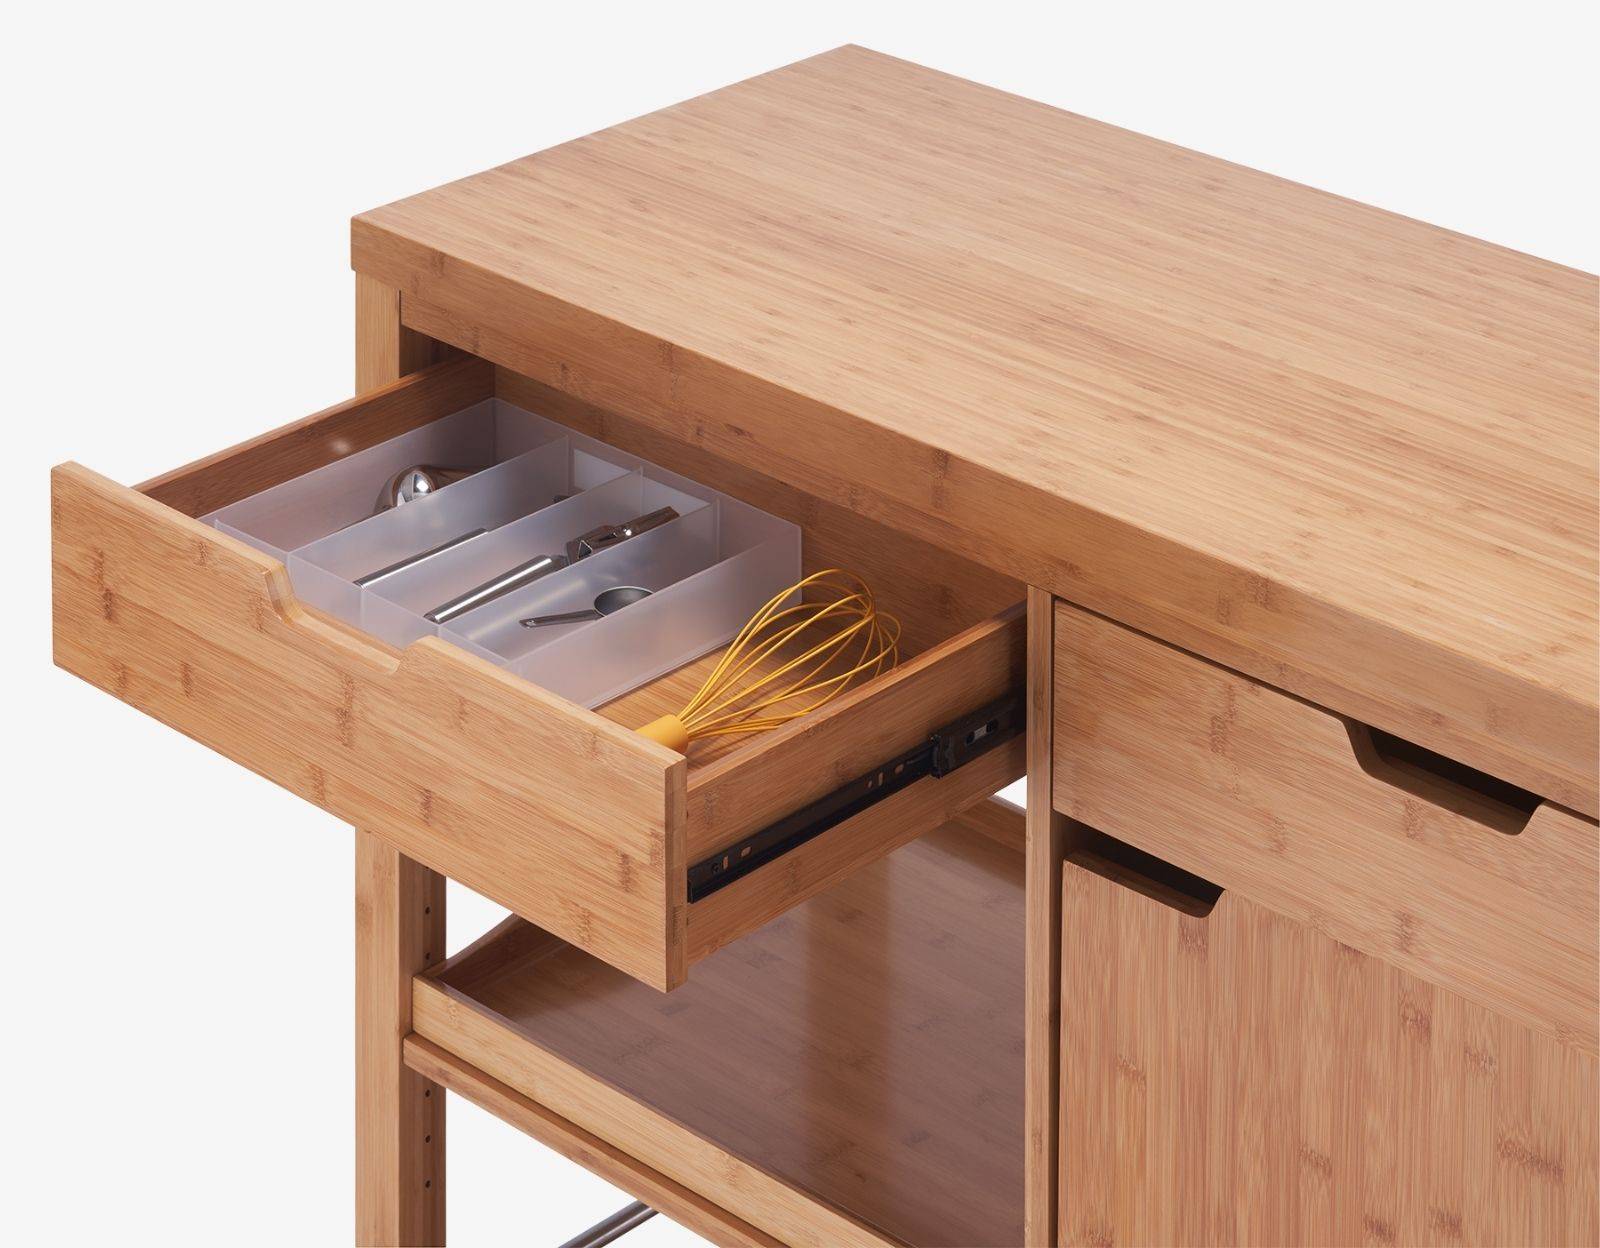 drawer extended showing kitchen utensils